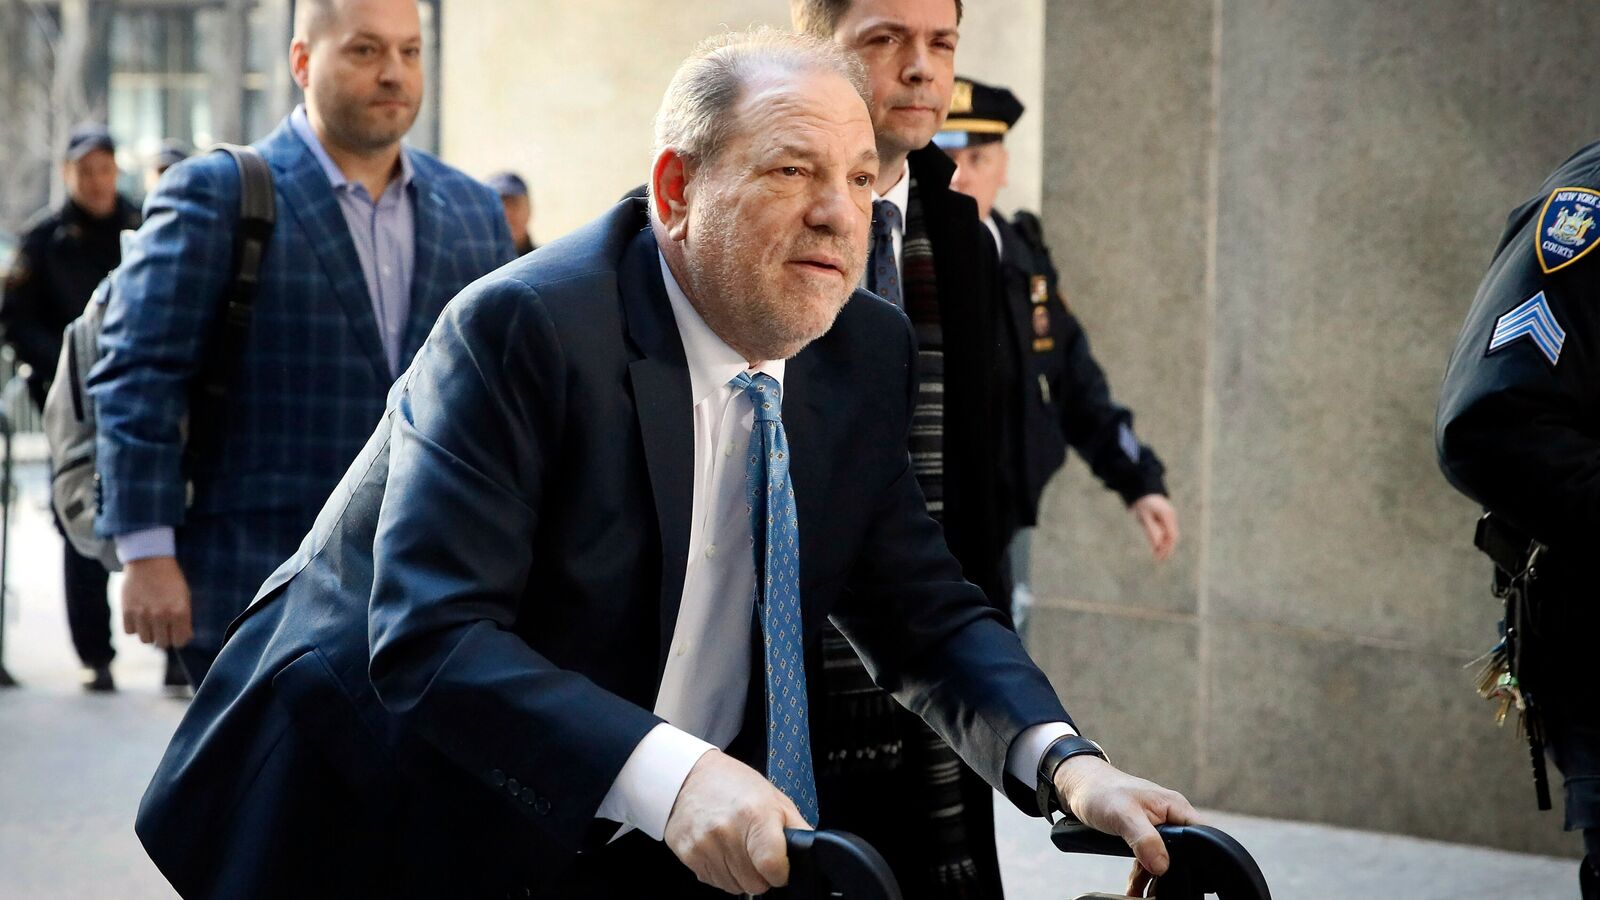 Harvey Weinstein hospitalised after New York court overturns rape conviction